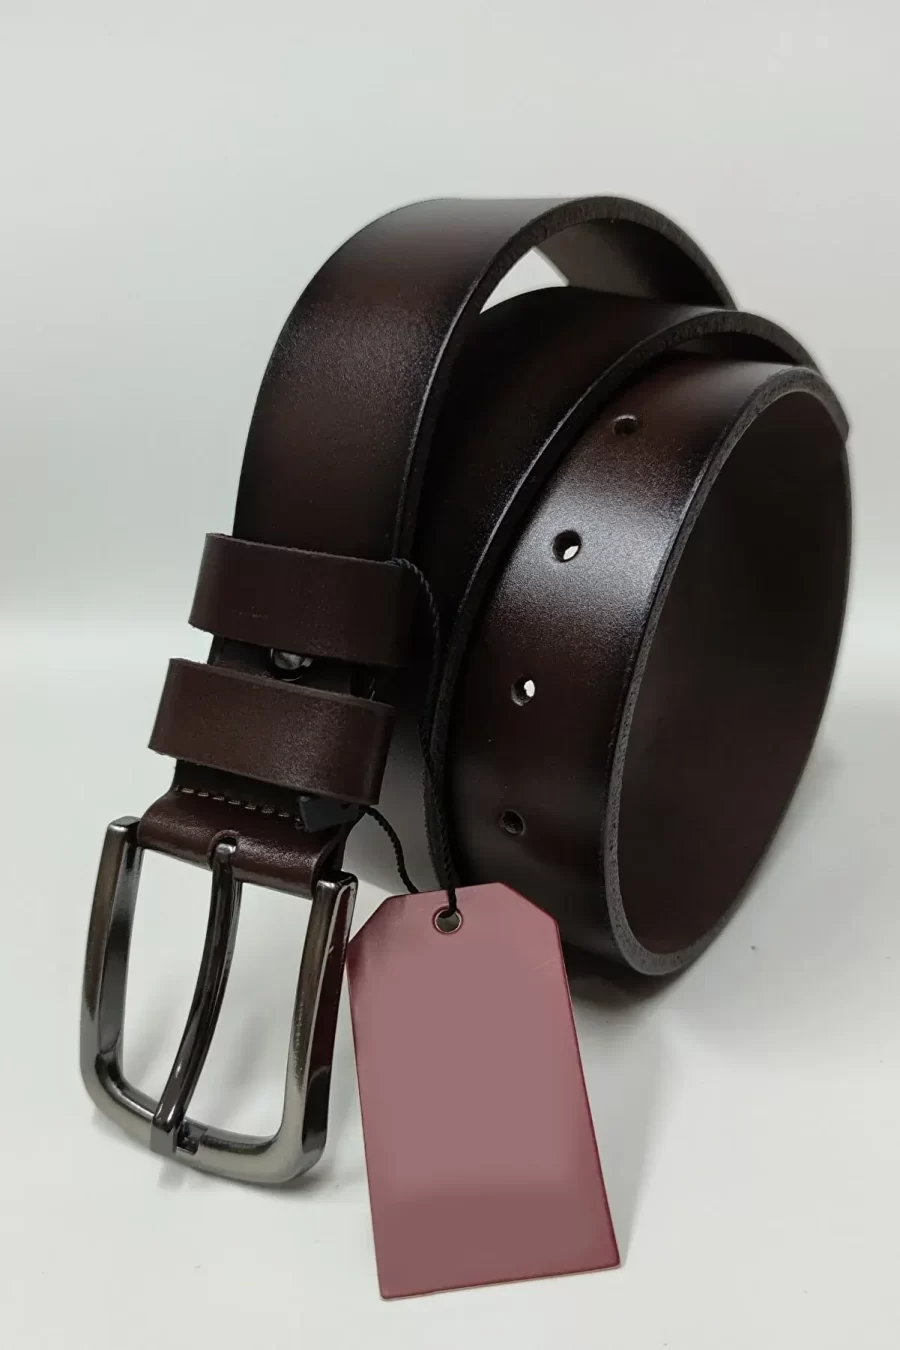 Dark Brown Gents Leather Belt For Jeans KD 111 2 2